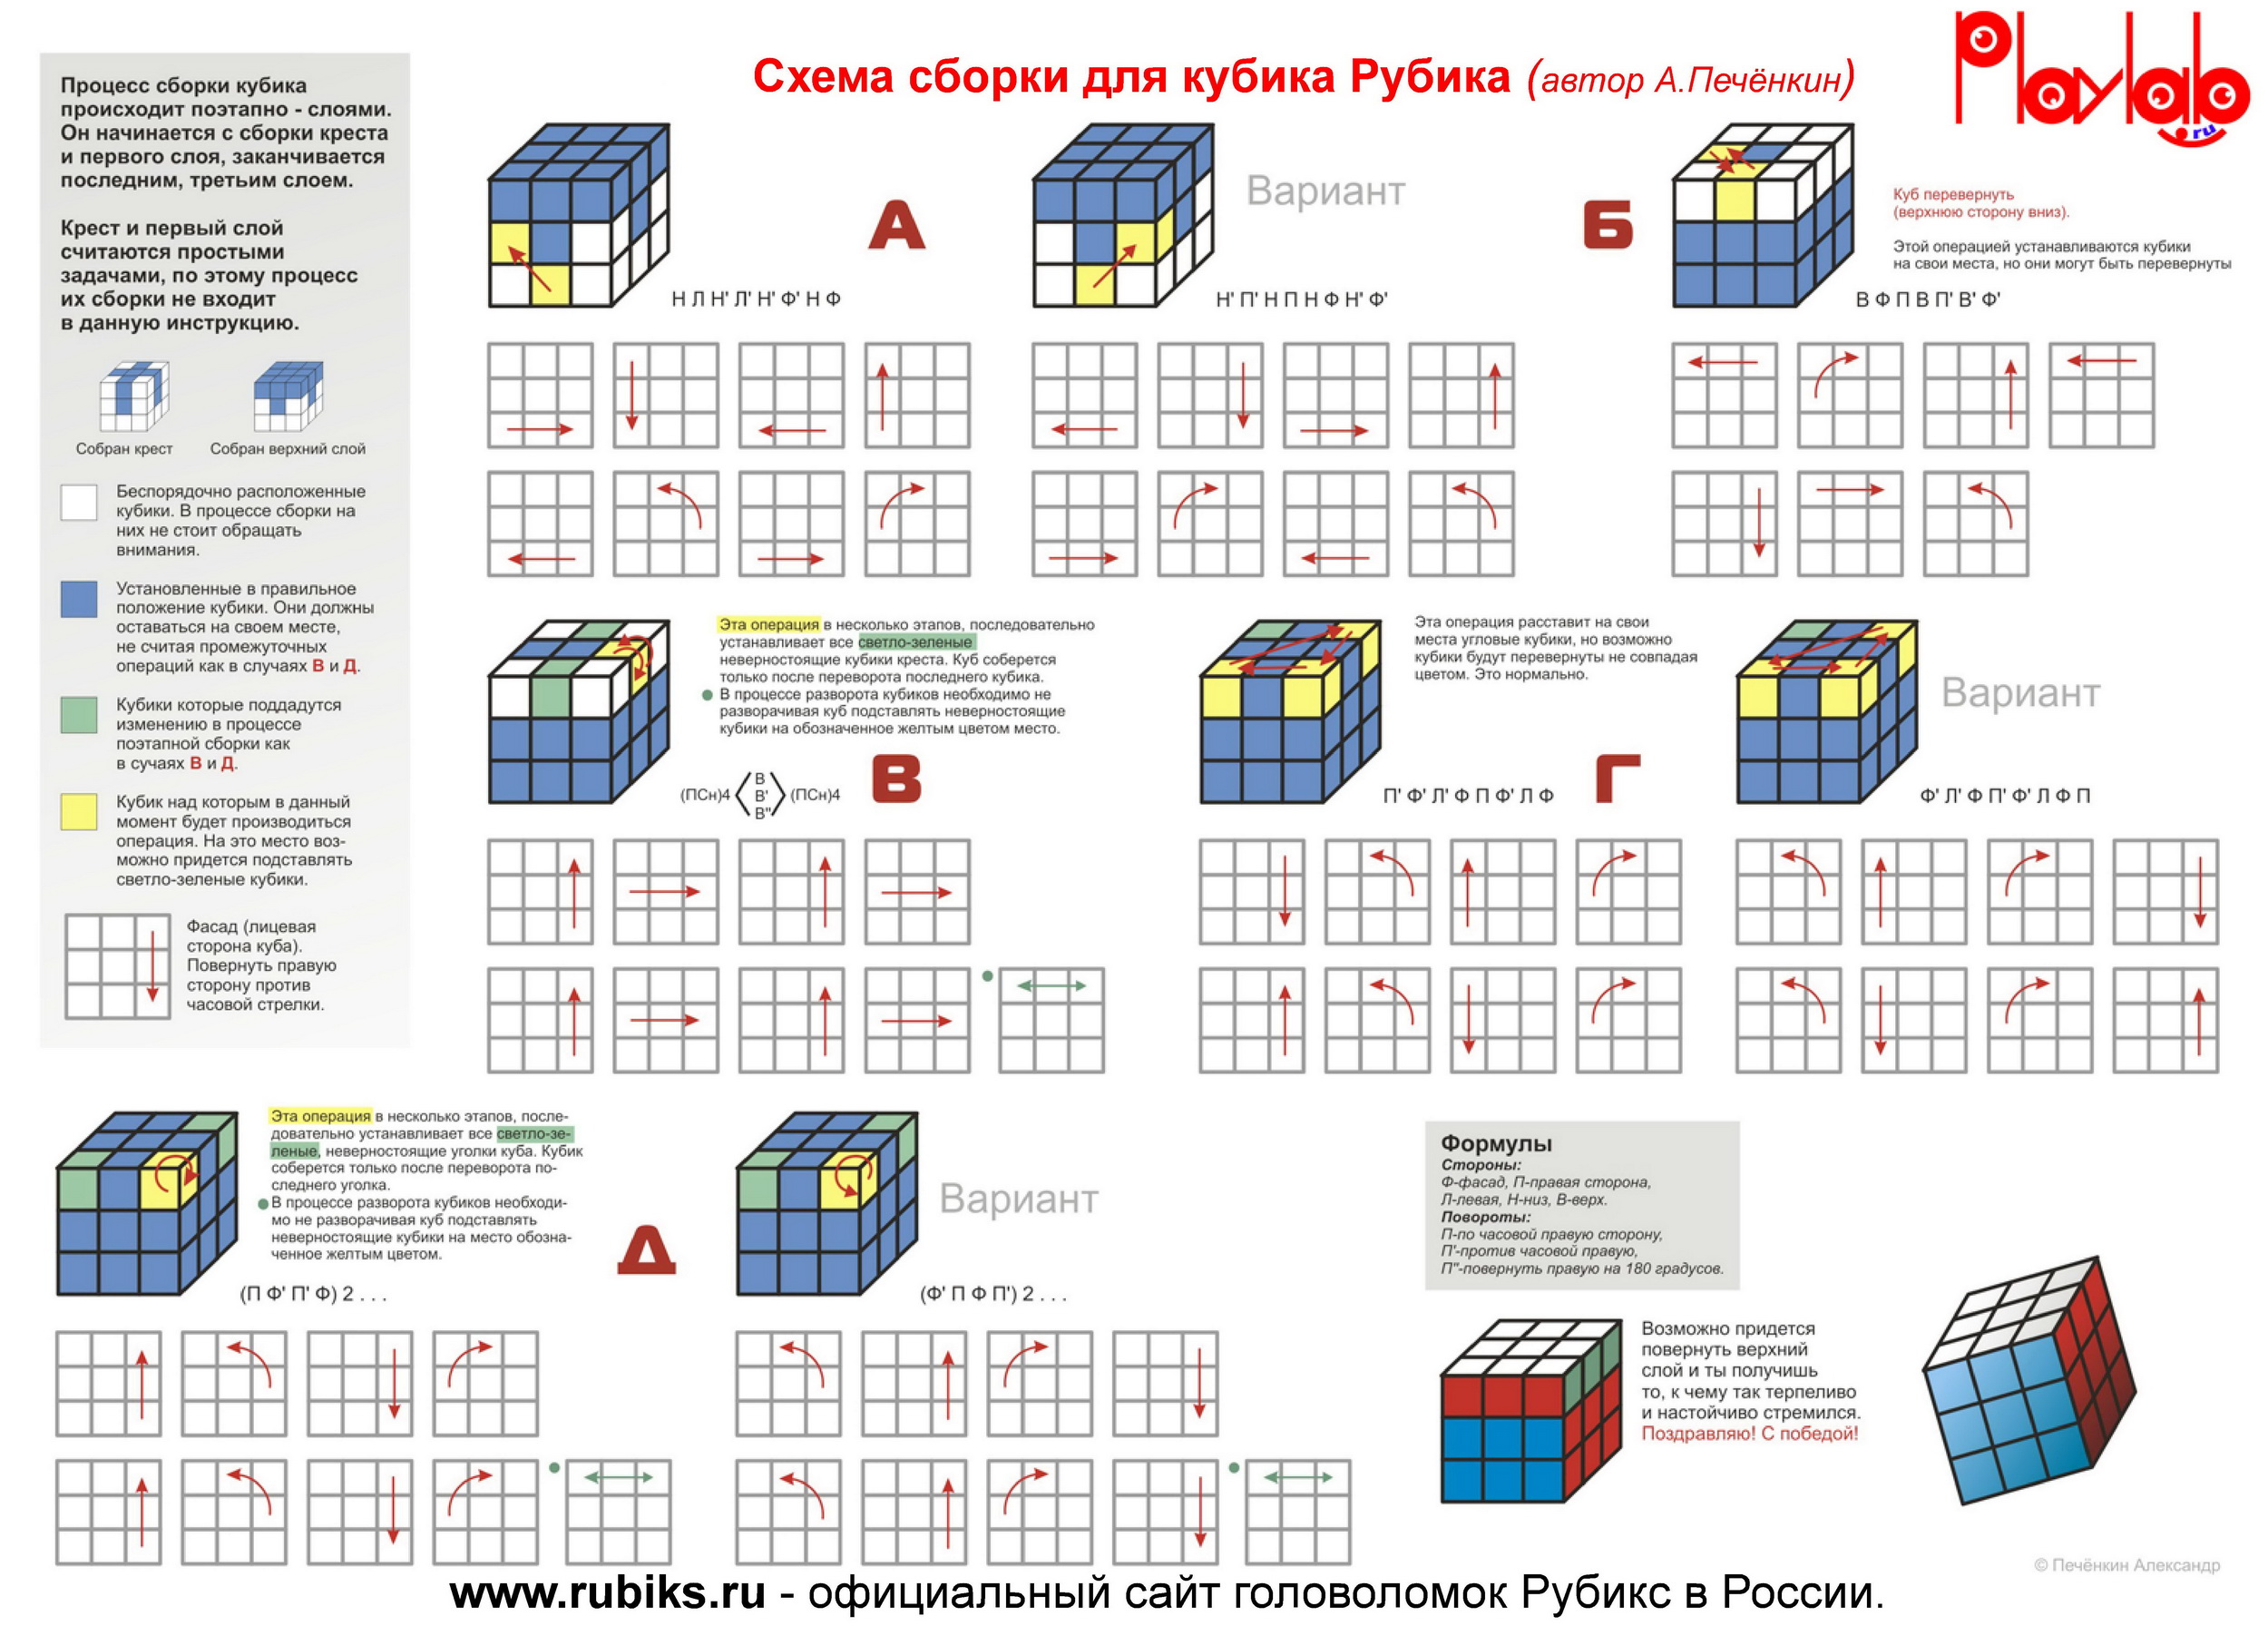 Самая простая сборка кубика. Схема собирания кубика Рубика 3х3 для начинающих. Формула кубика Рубика 3x3. Схема сборки кубика Рубика 3х3. Схема складывания кубика Рубика 3х3.